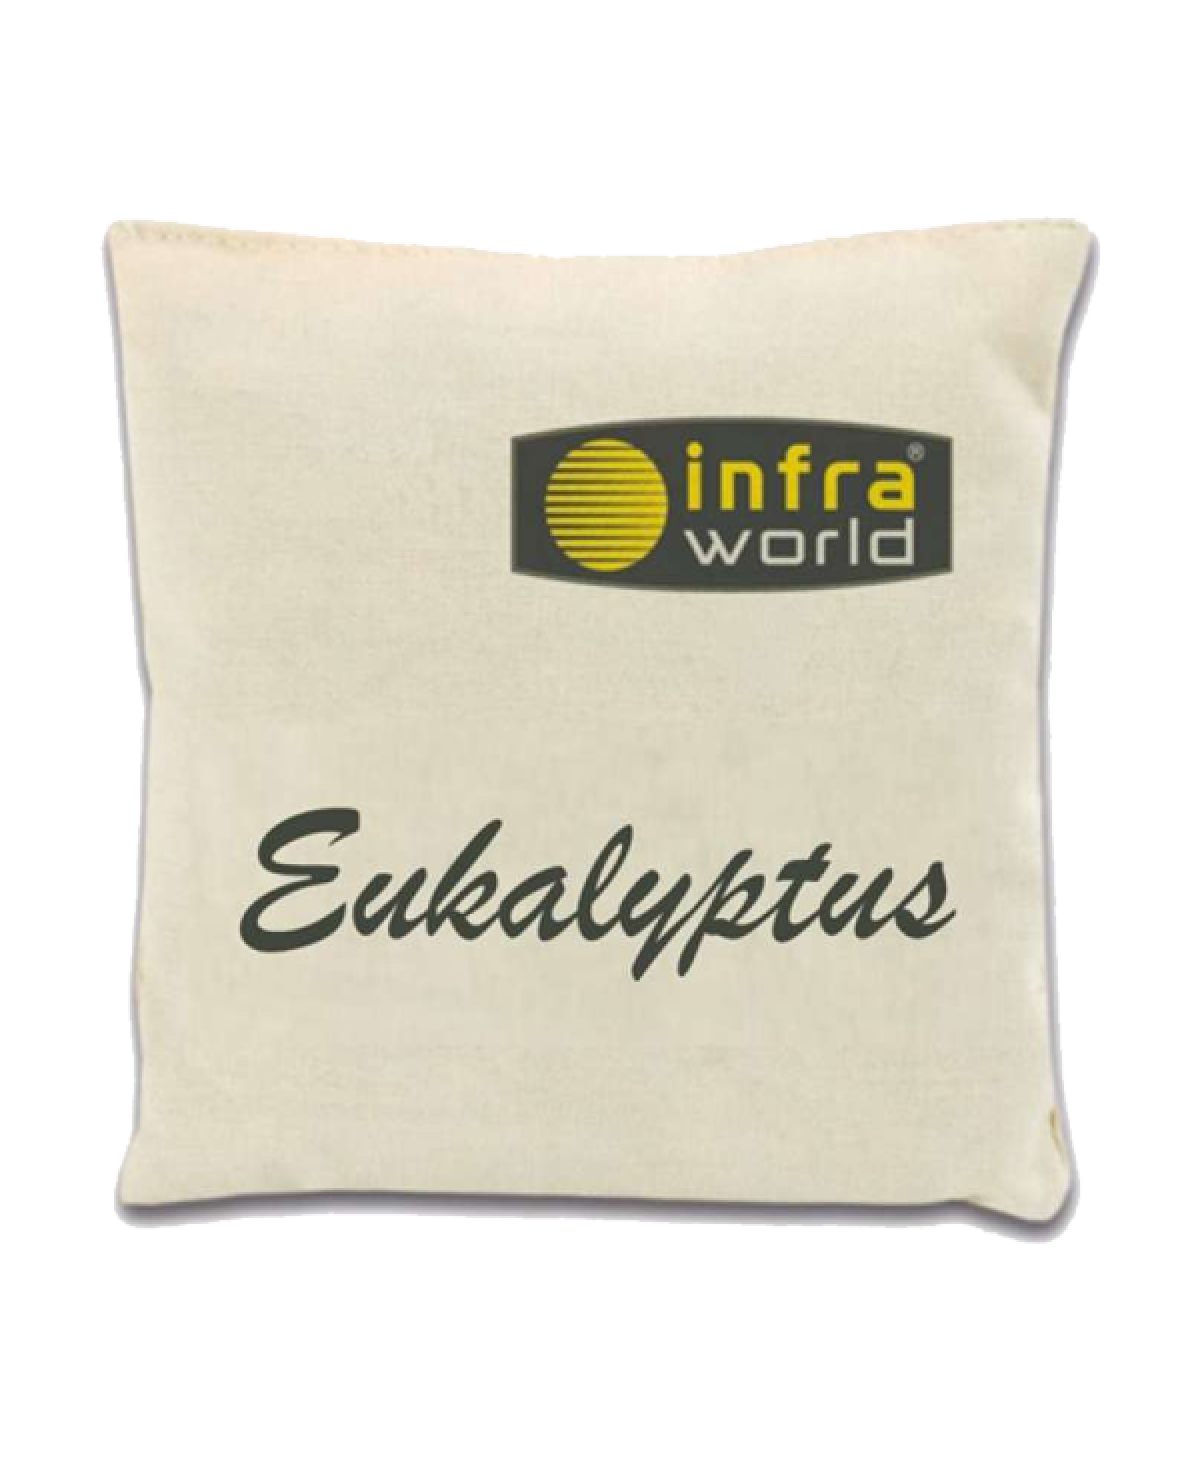 Infraworld Duftkissen Eukalyptus